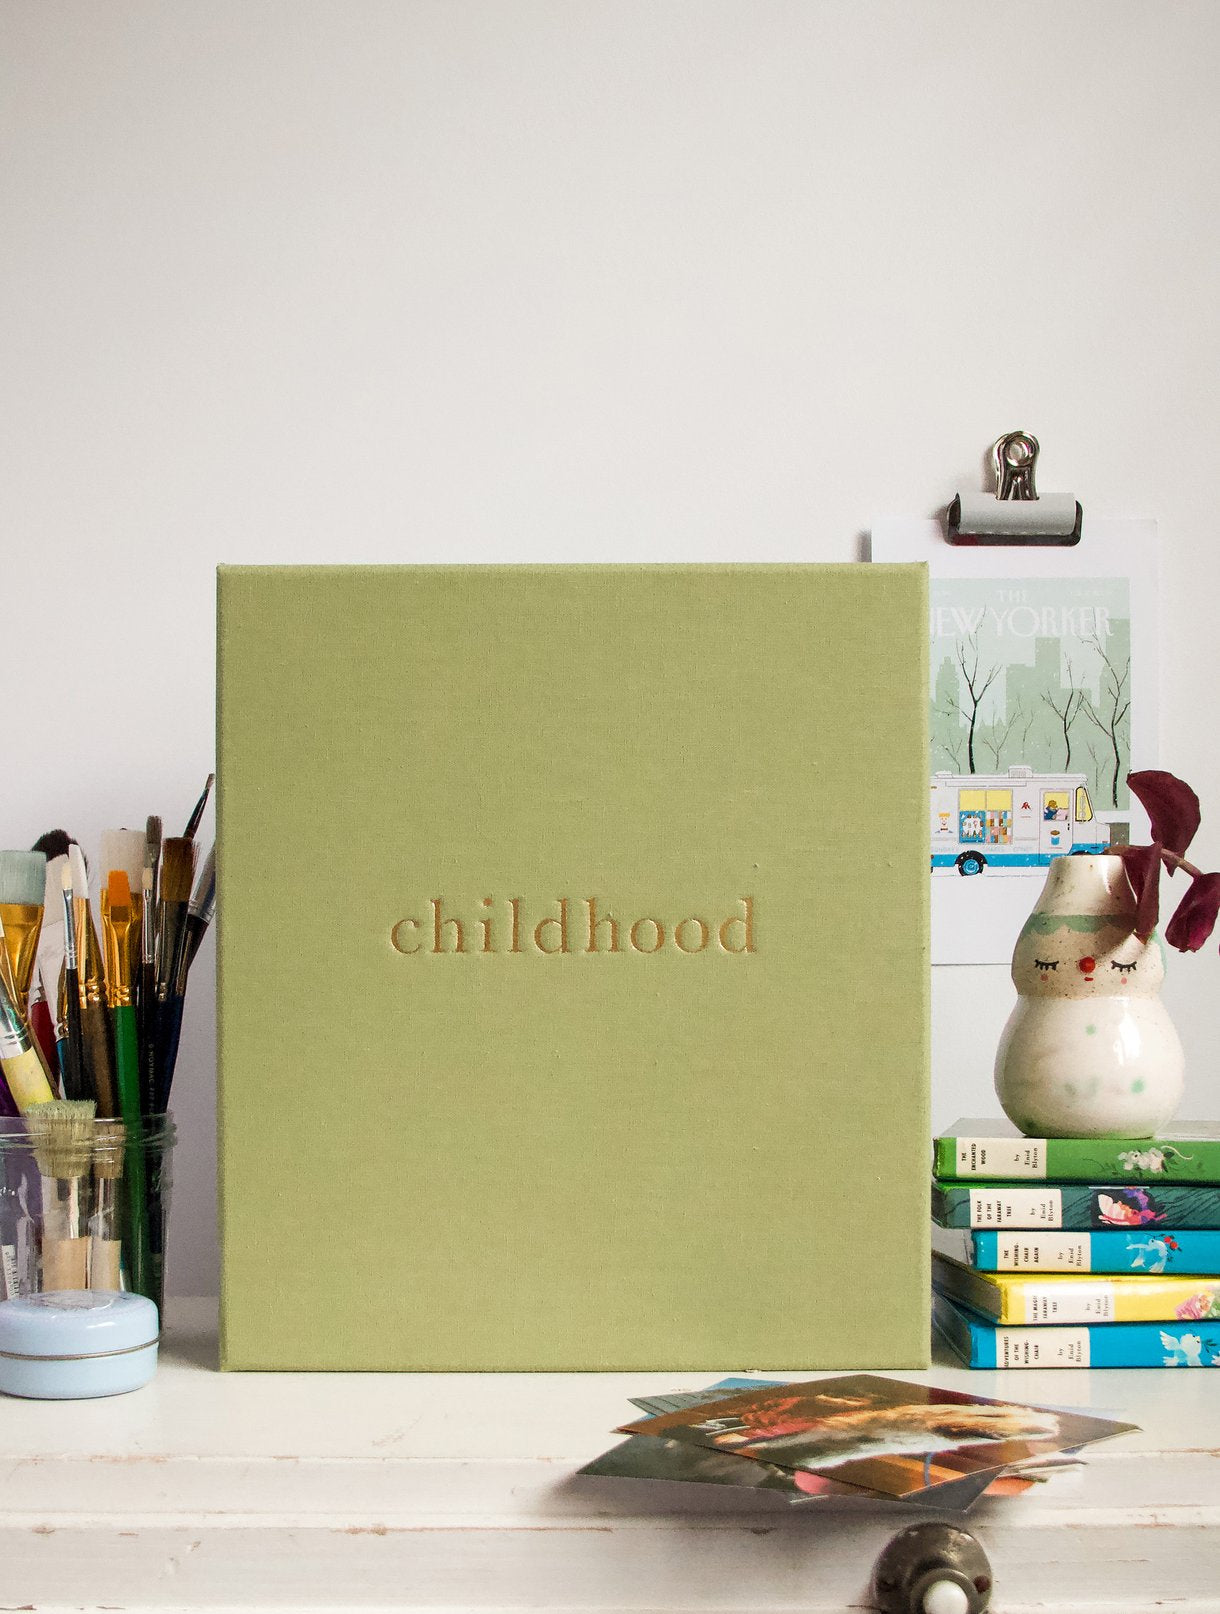 Write to Me | Childhood - Your Childhood Memories